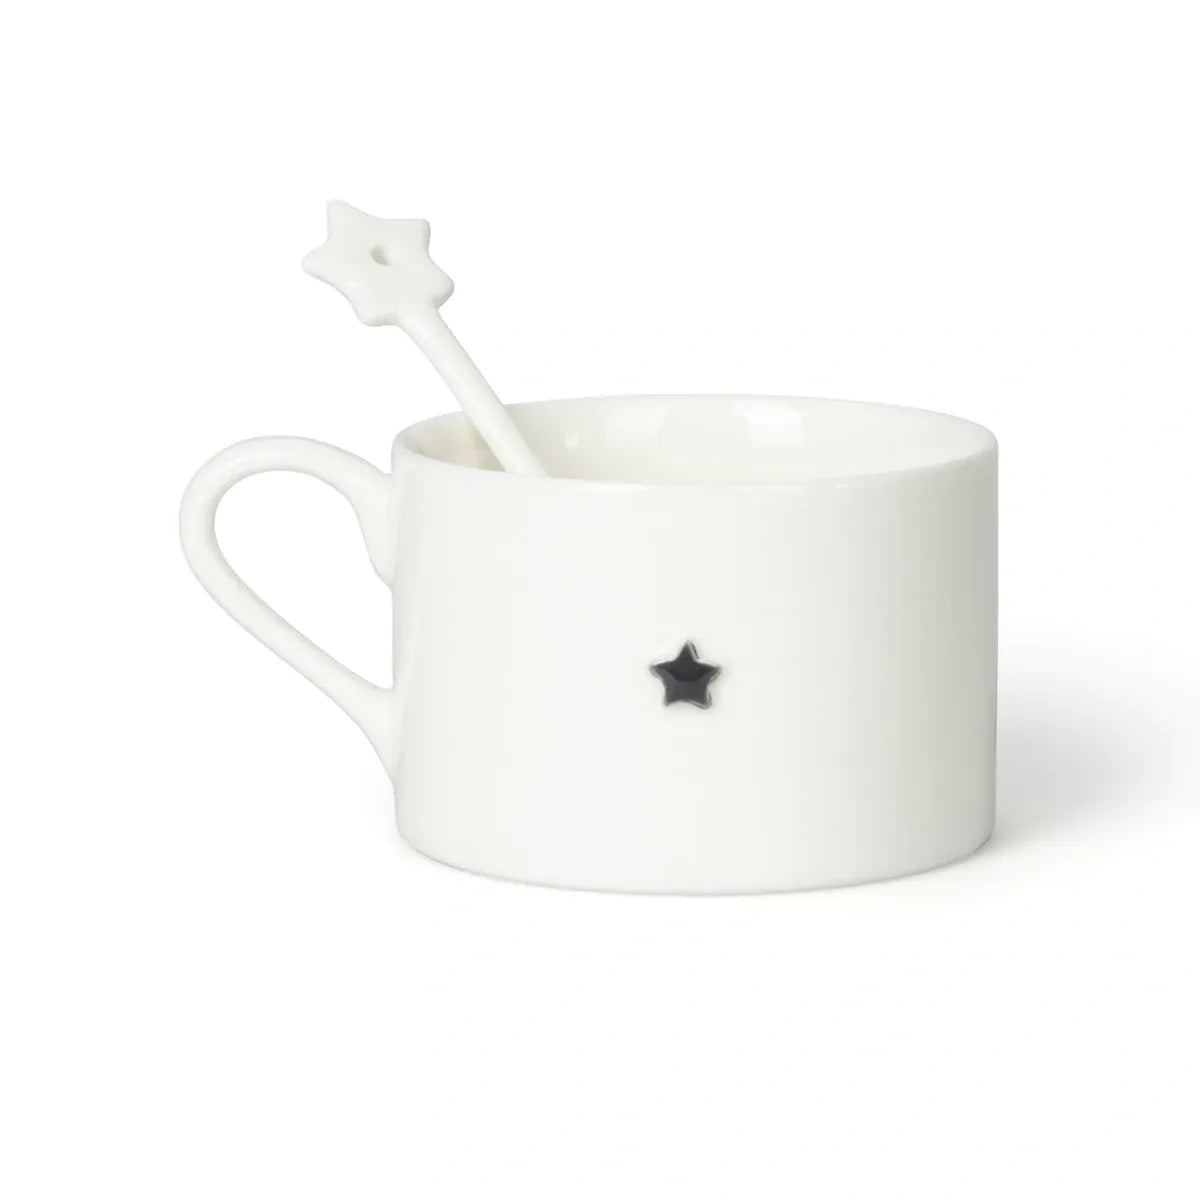 Chalk UK white or charcoal porcelain mug